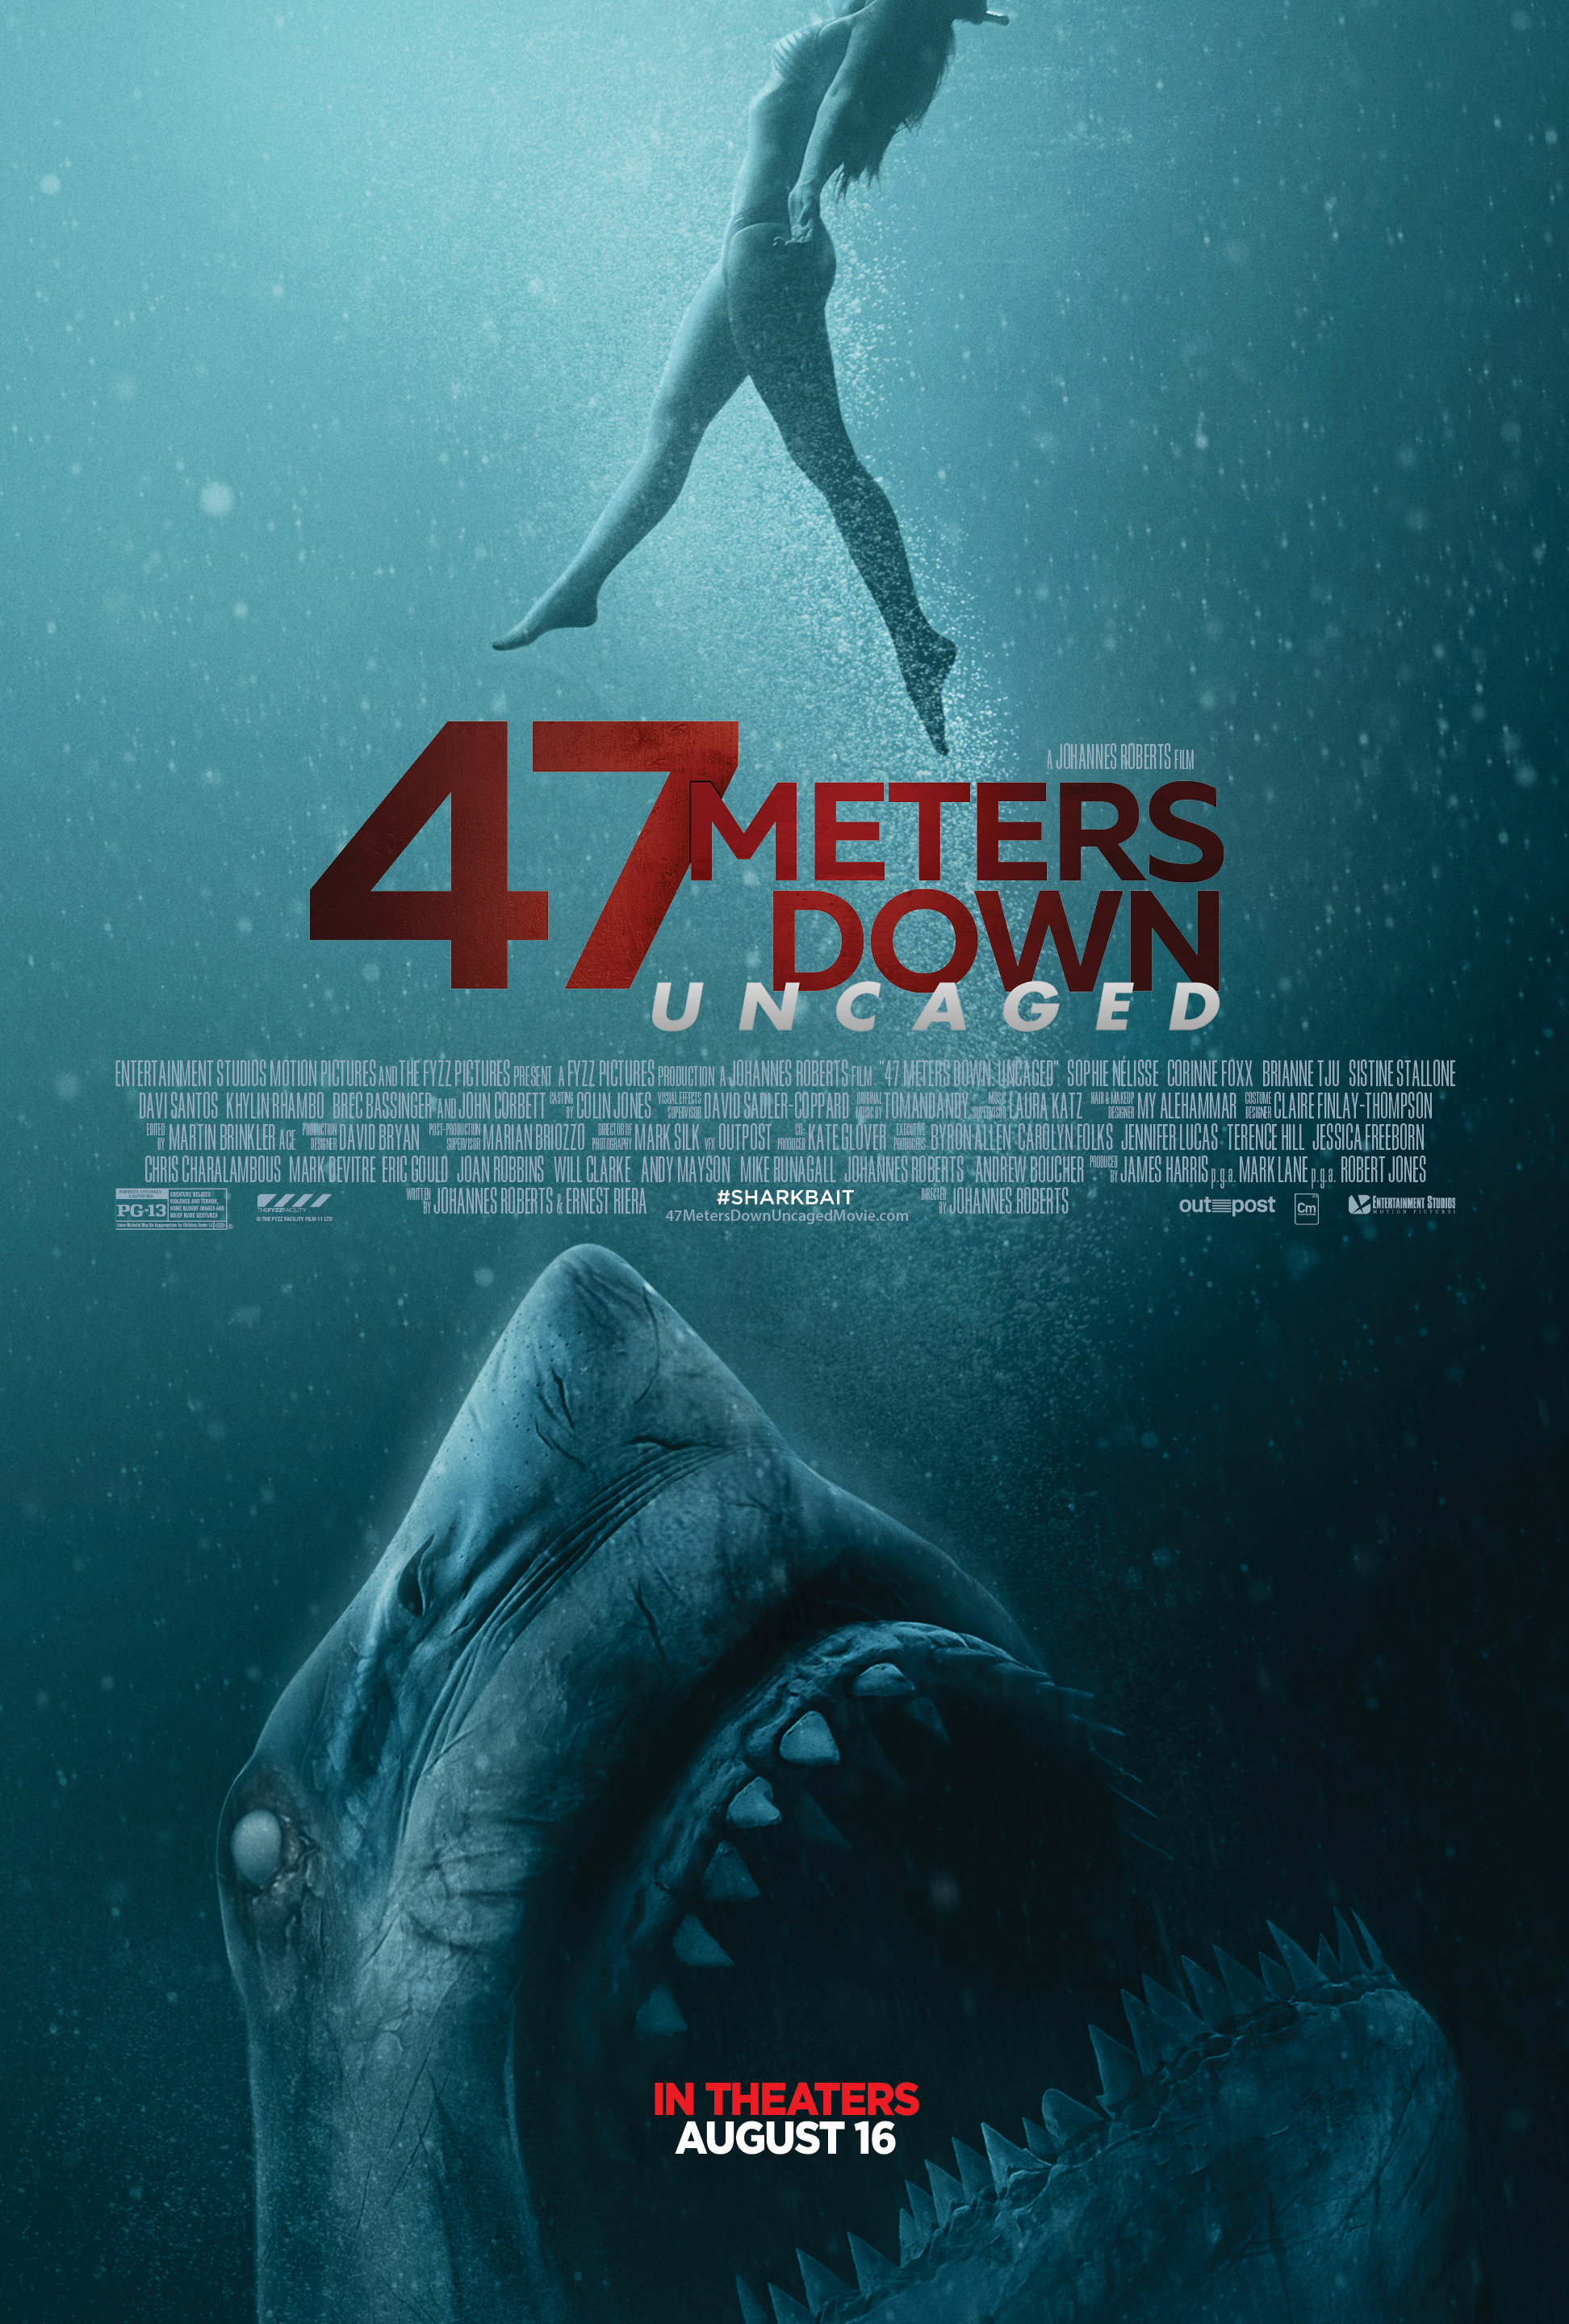 Stiahni si Filmy s titulkama 47 metru: Mimo klec / 47 Meters Down: Uncaged (2019)[WebRip] = CSFD 45%